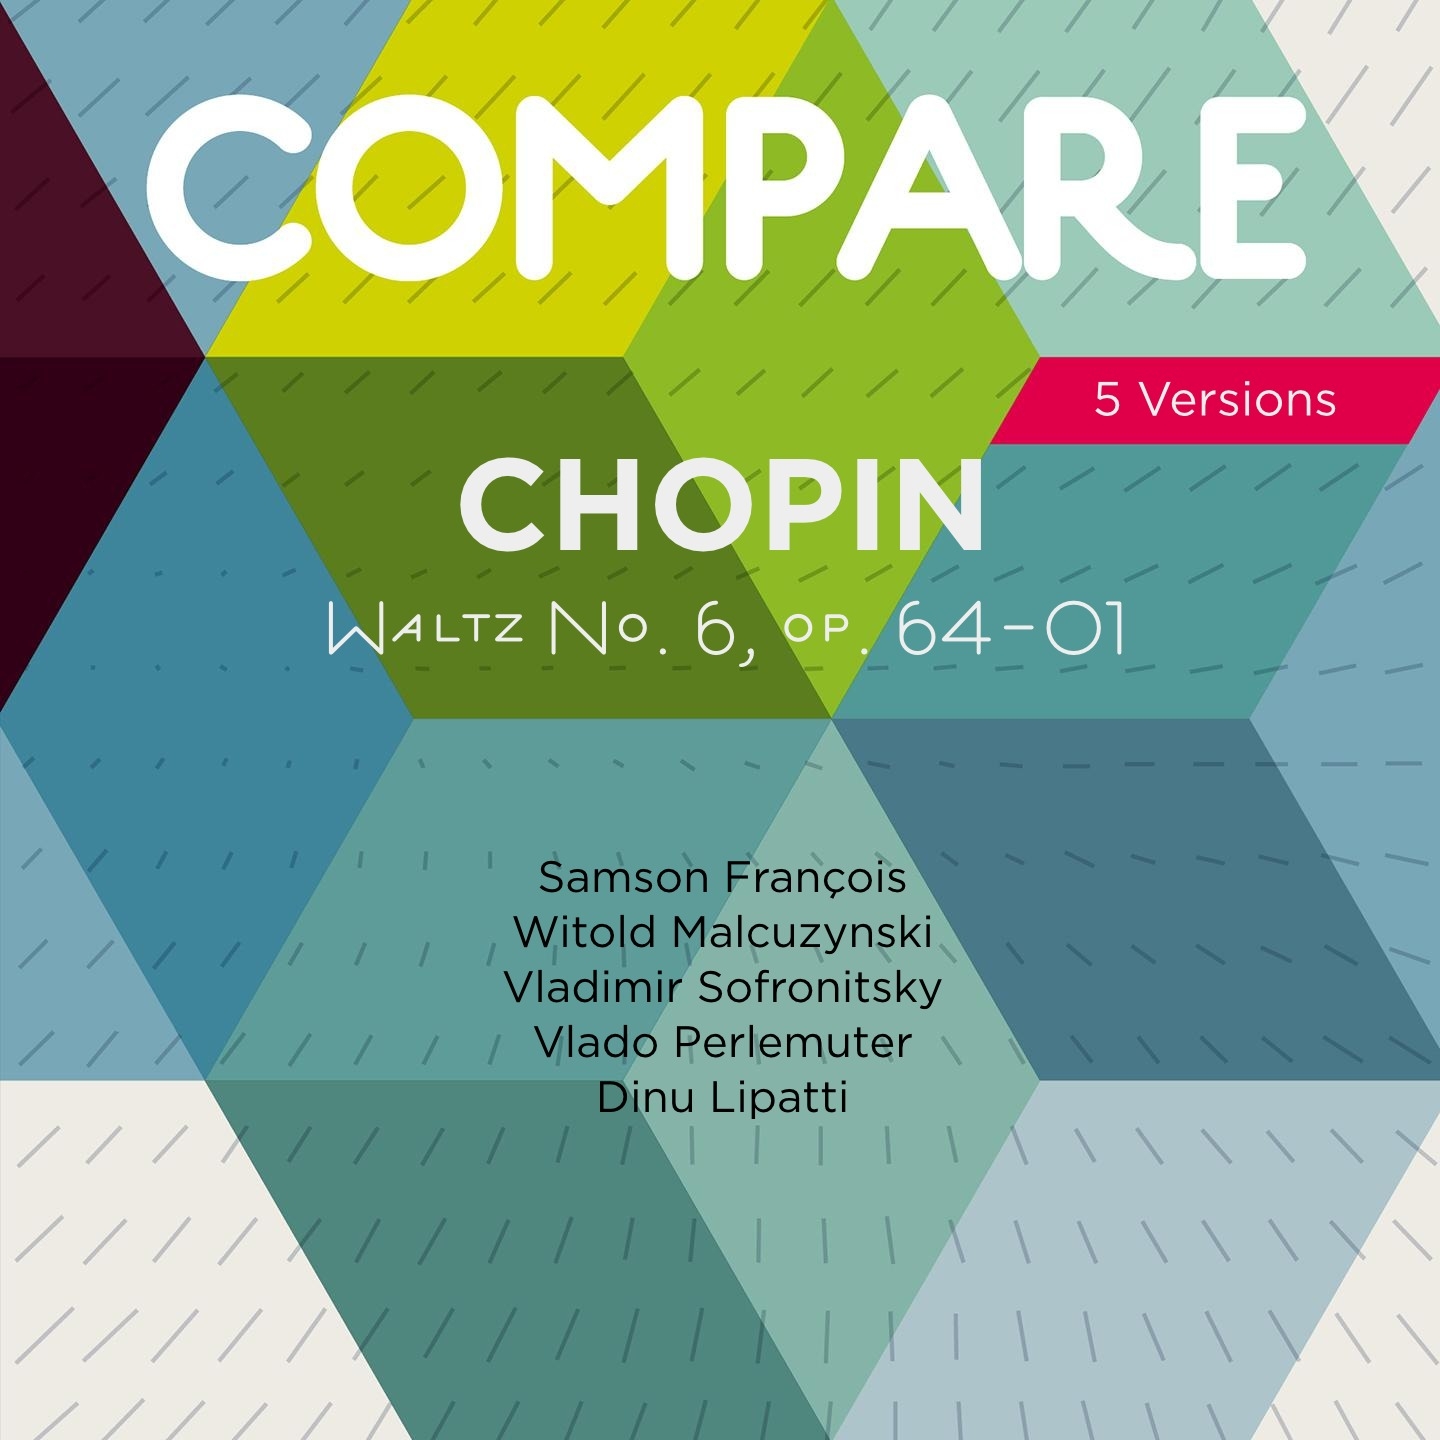 Chopin: Waltzes, Op. 64 " Minute Waltz", Samson Fran ois vs. Witold Malcuzynski vs. Vladimir Sofronitsky vs. Vlado Perlemuter vs. Dinu Lipattia